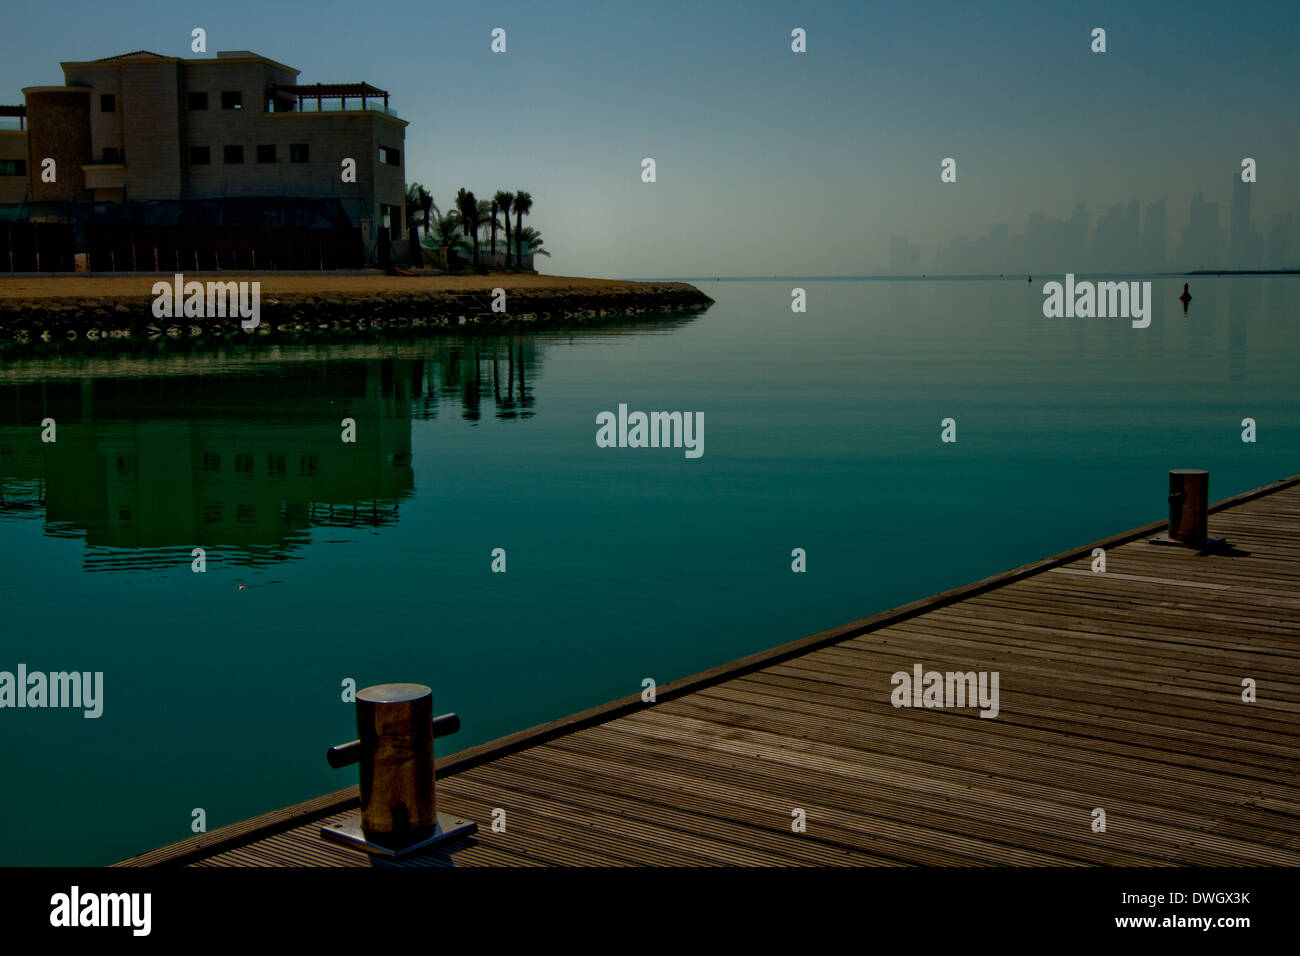 Qatar City Scape View Morning Mist Quay Sun Flare Stock Photo